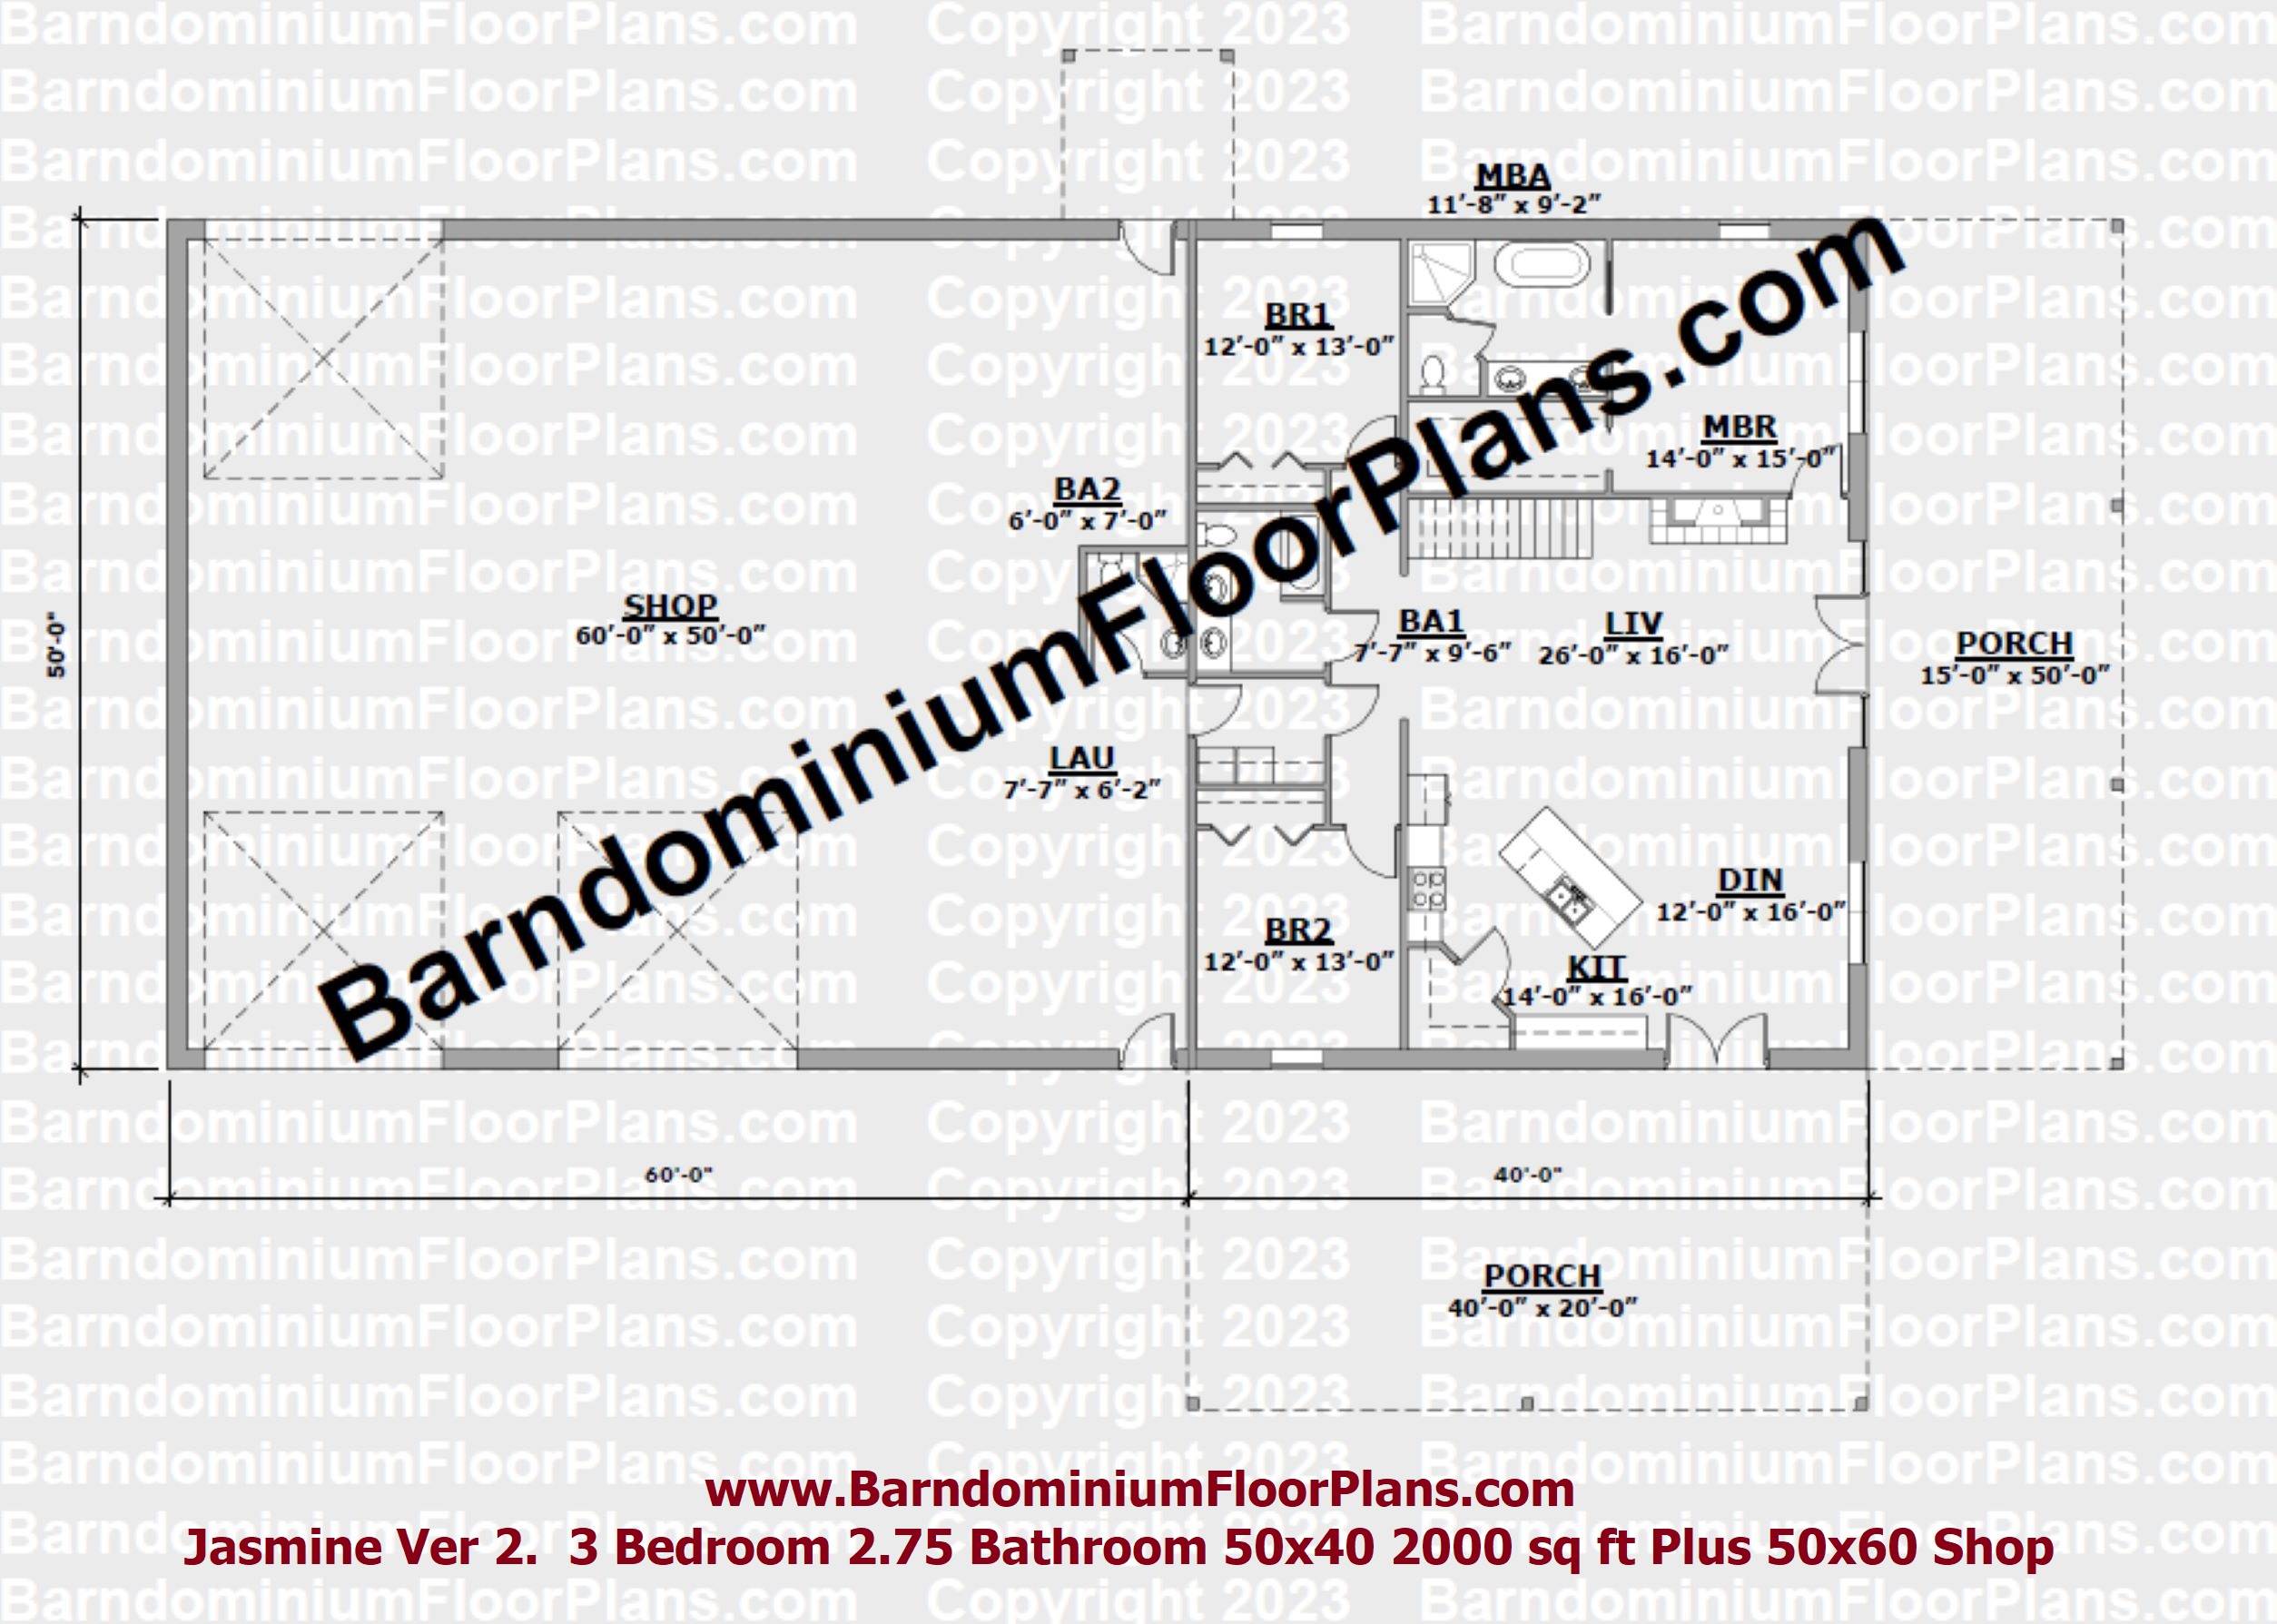 jasmine-v2-floor-plan-4050-3bd-2ba-plus-shop-barndominiumfloorplans.com